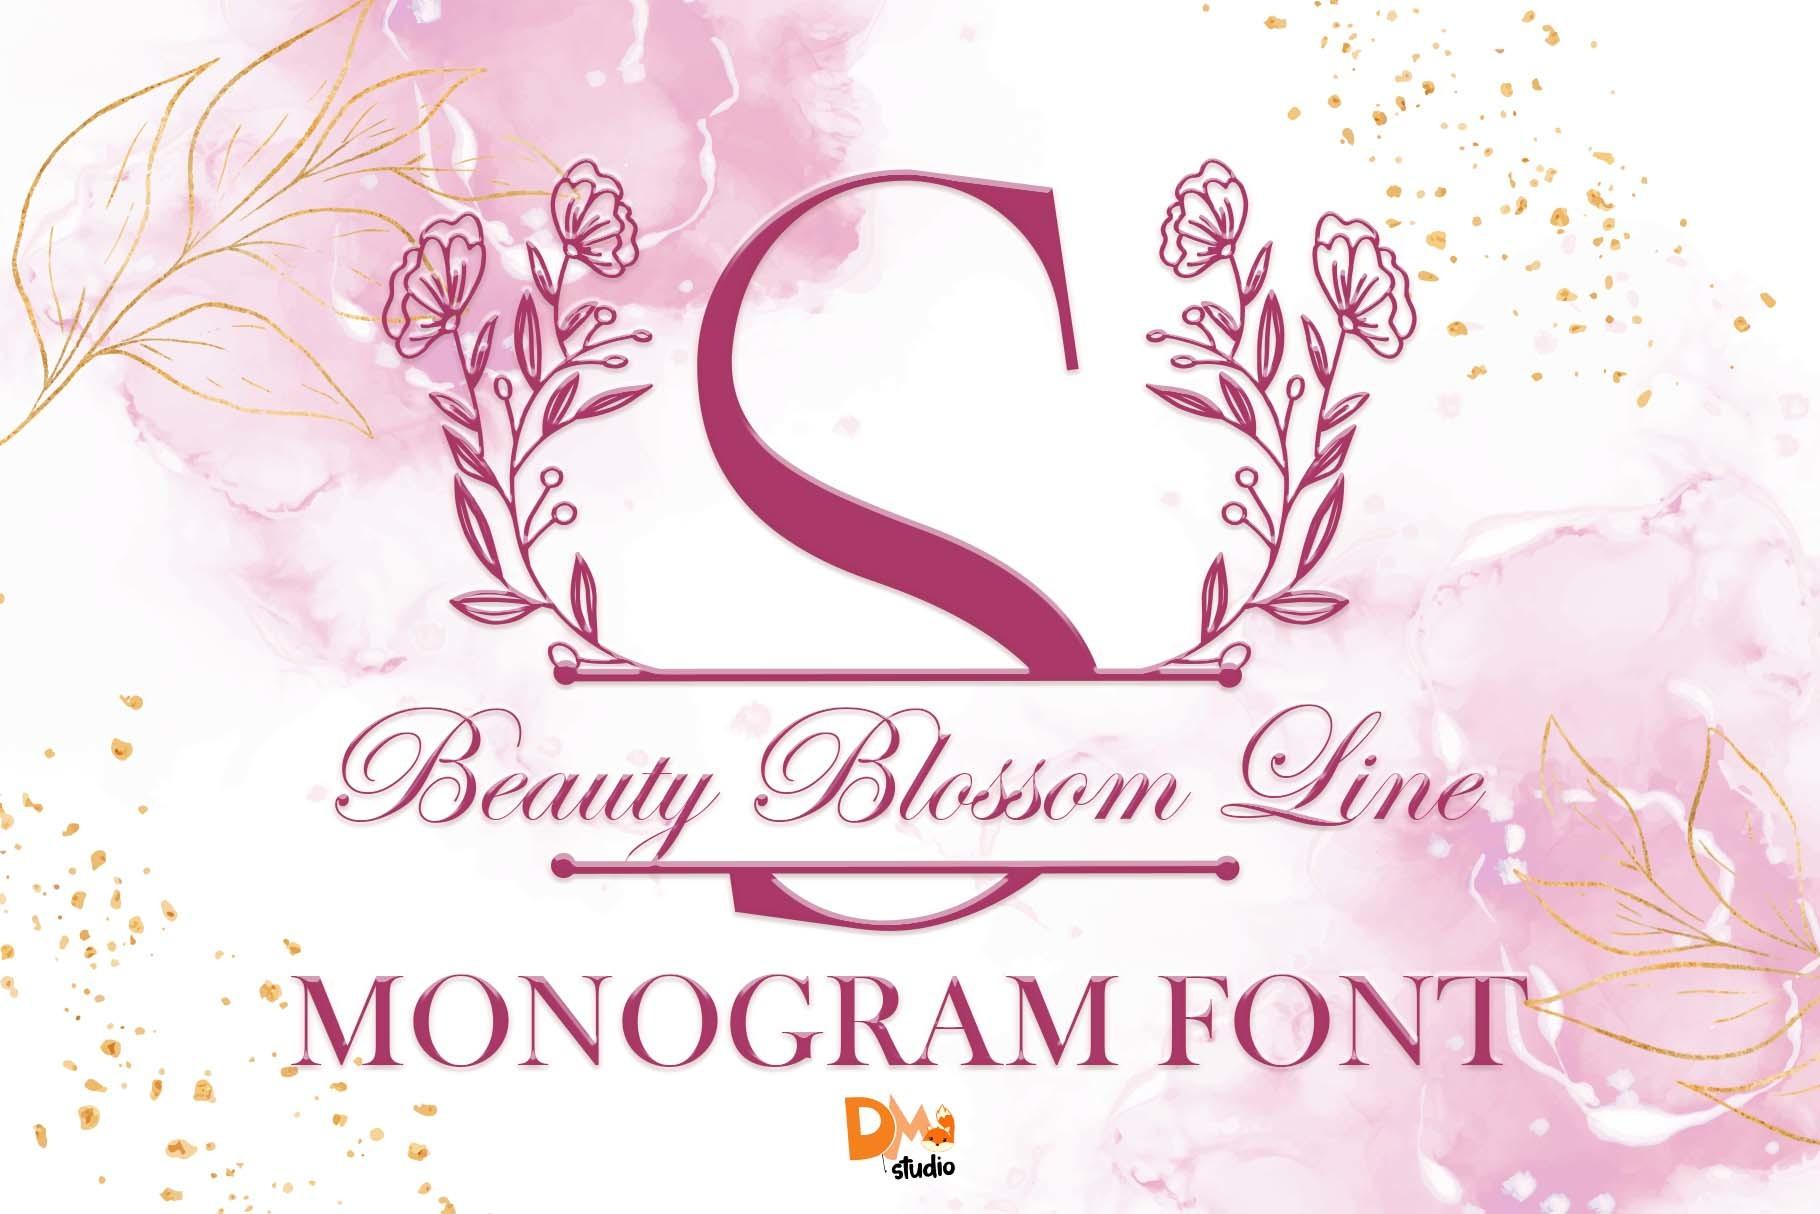 Beauty Blossom Line Monogram Font